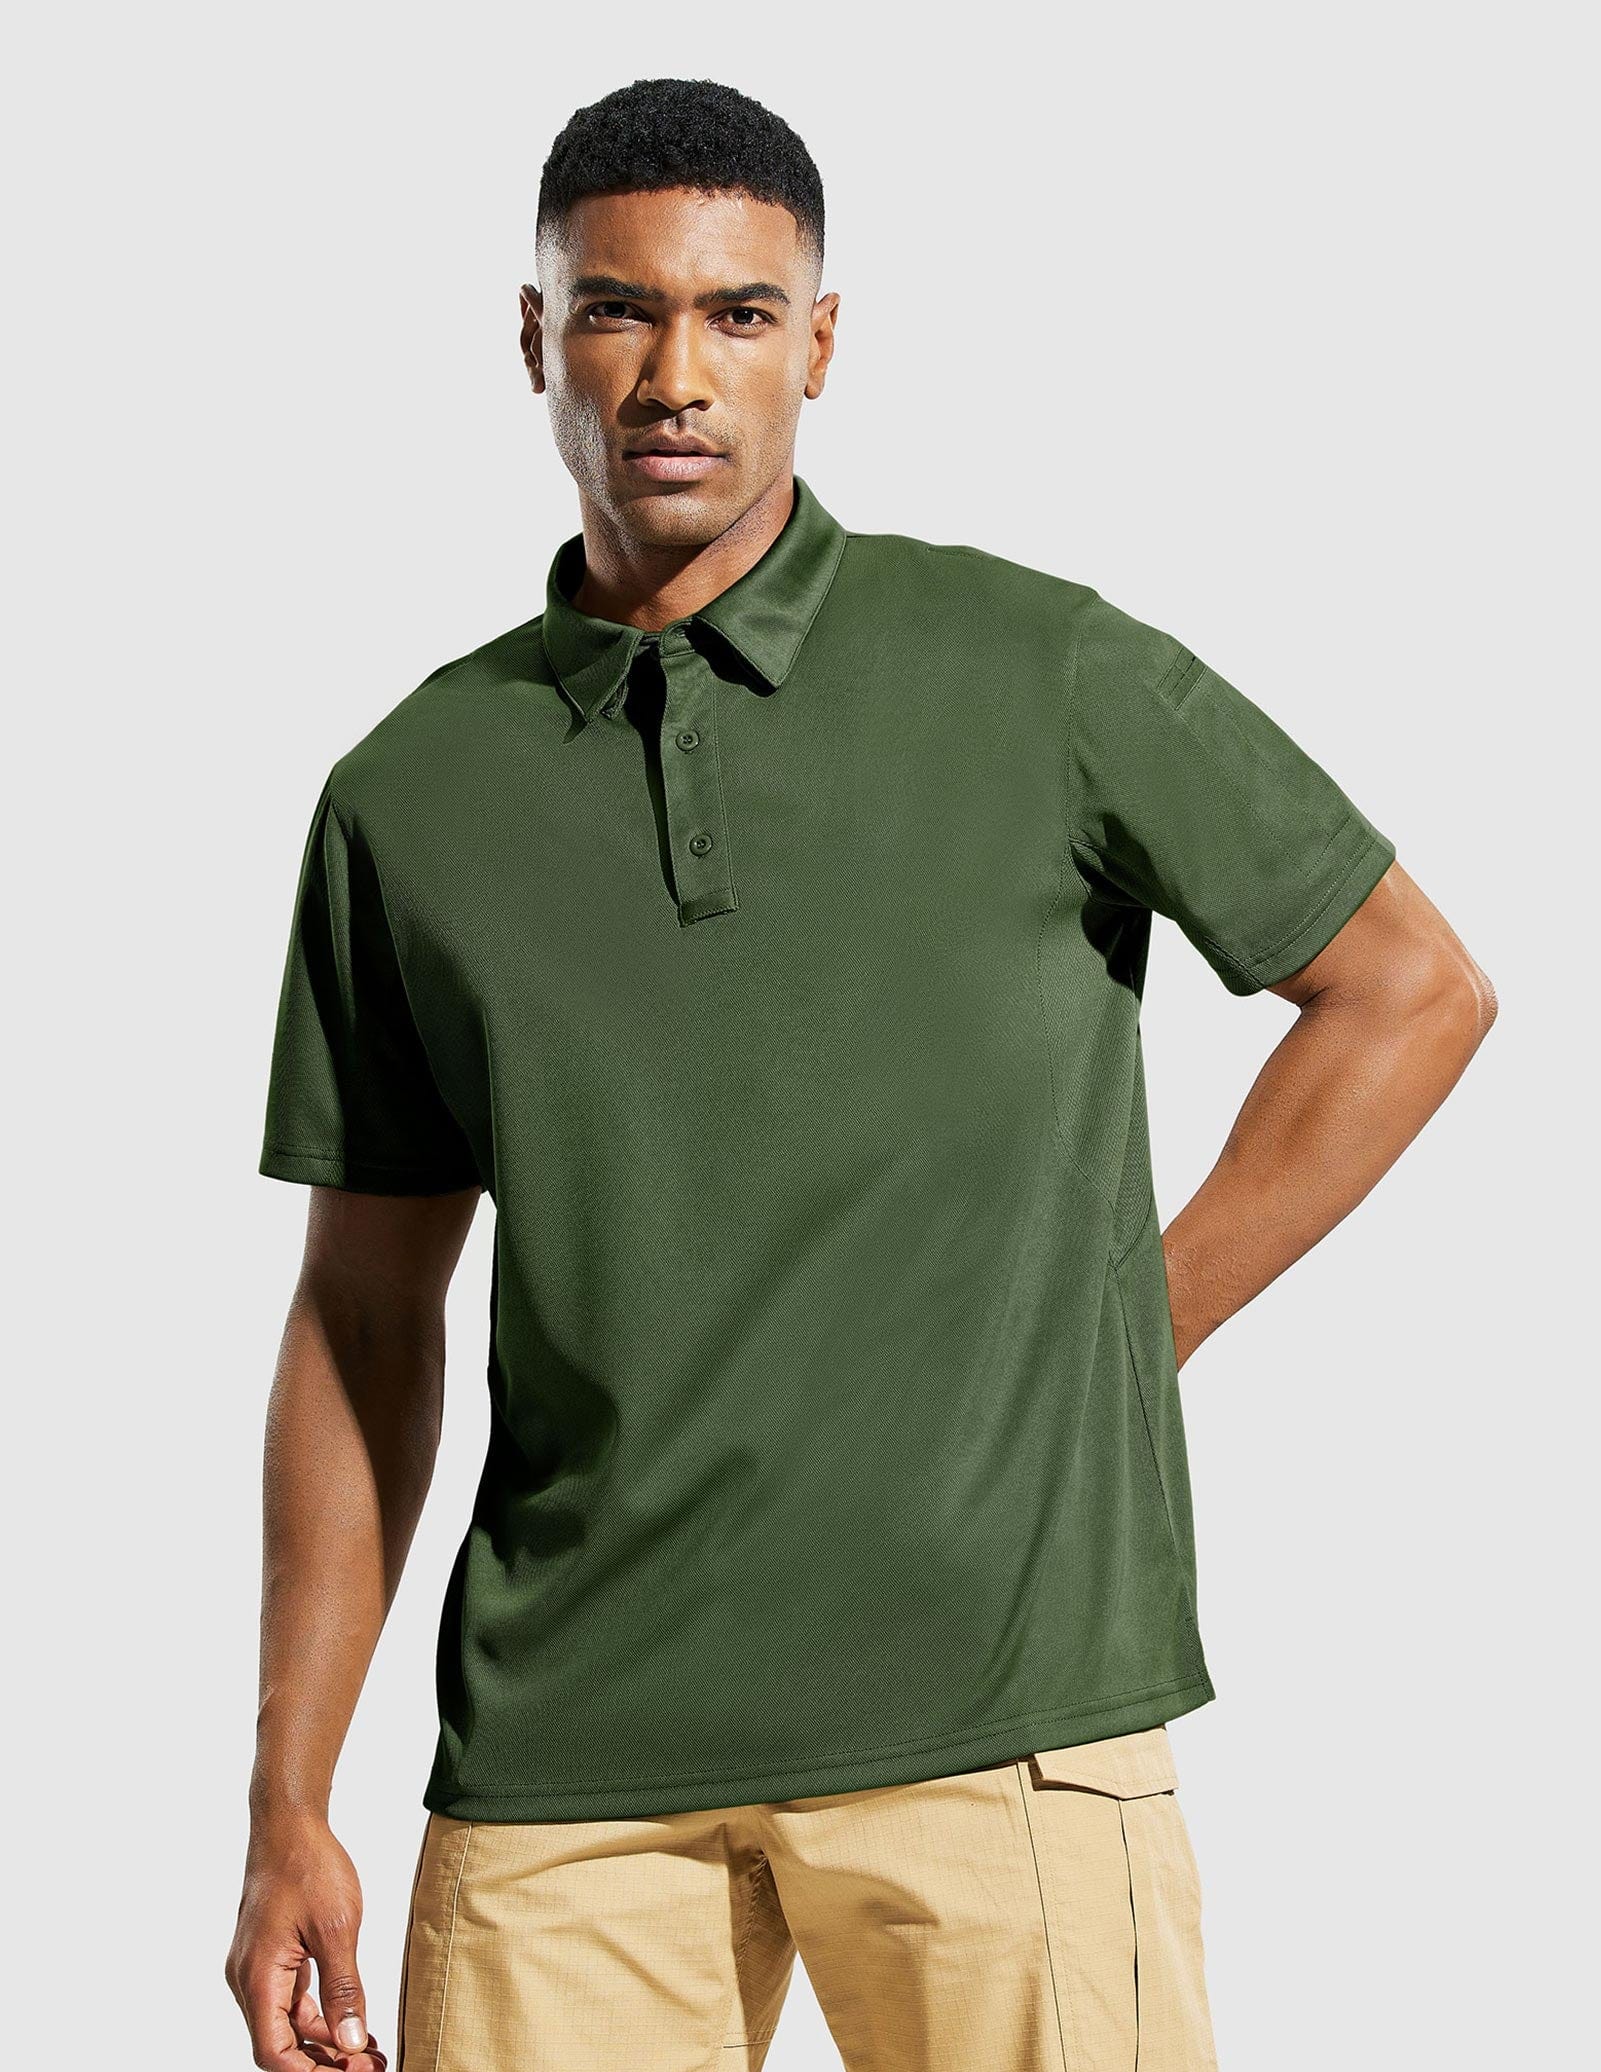 MIER Men\'s Tactical Polo Shirts Outdoor Collared Shirt